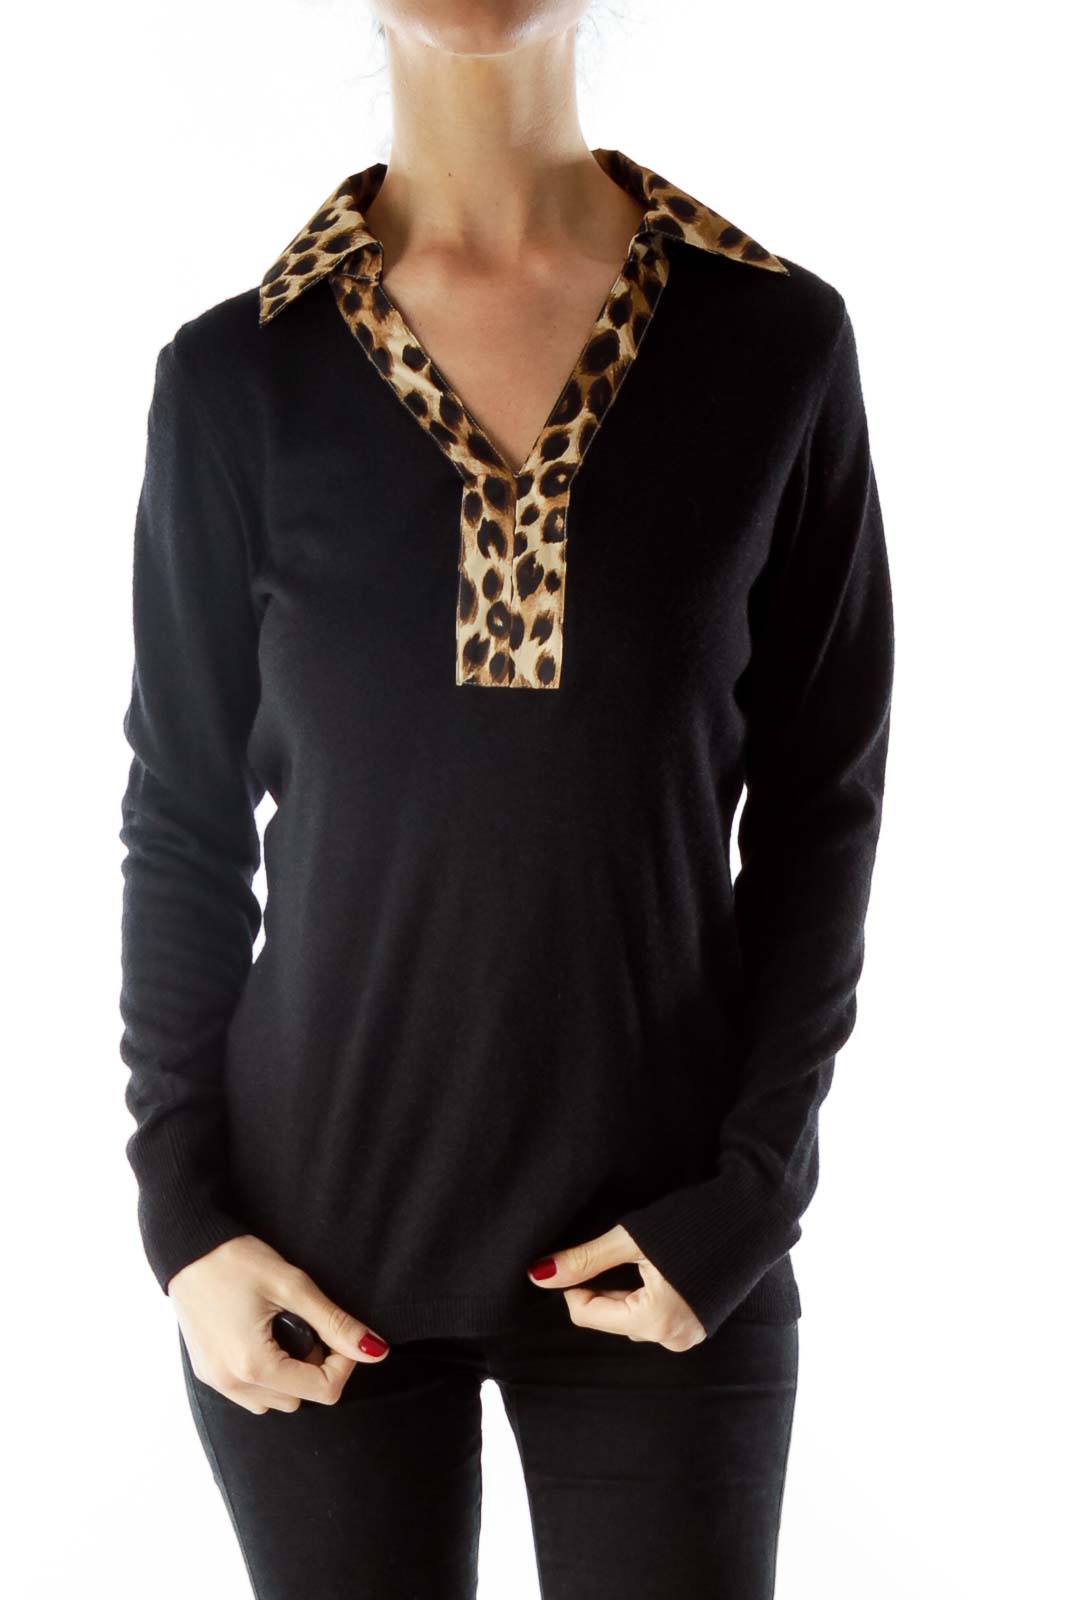 Cheetah collared black knit Front